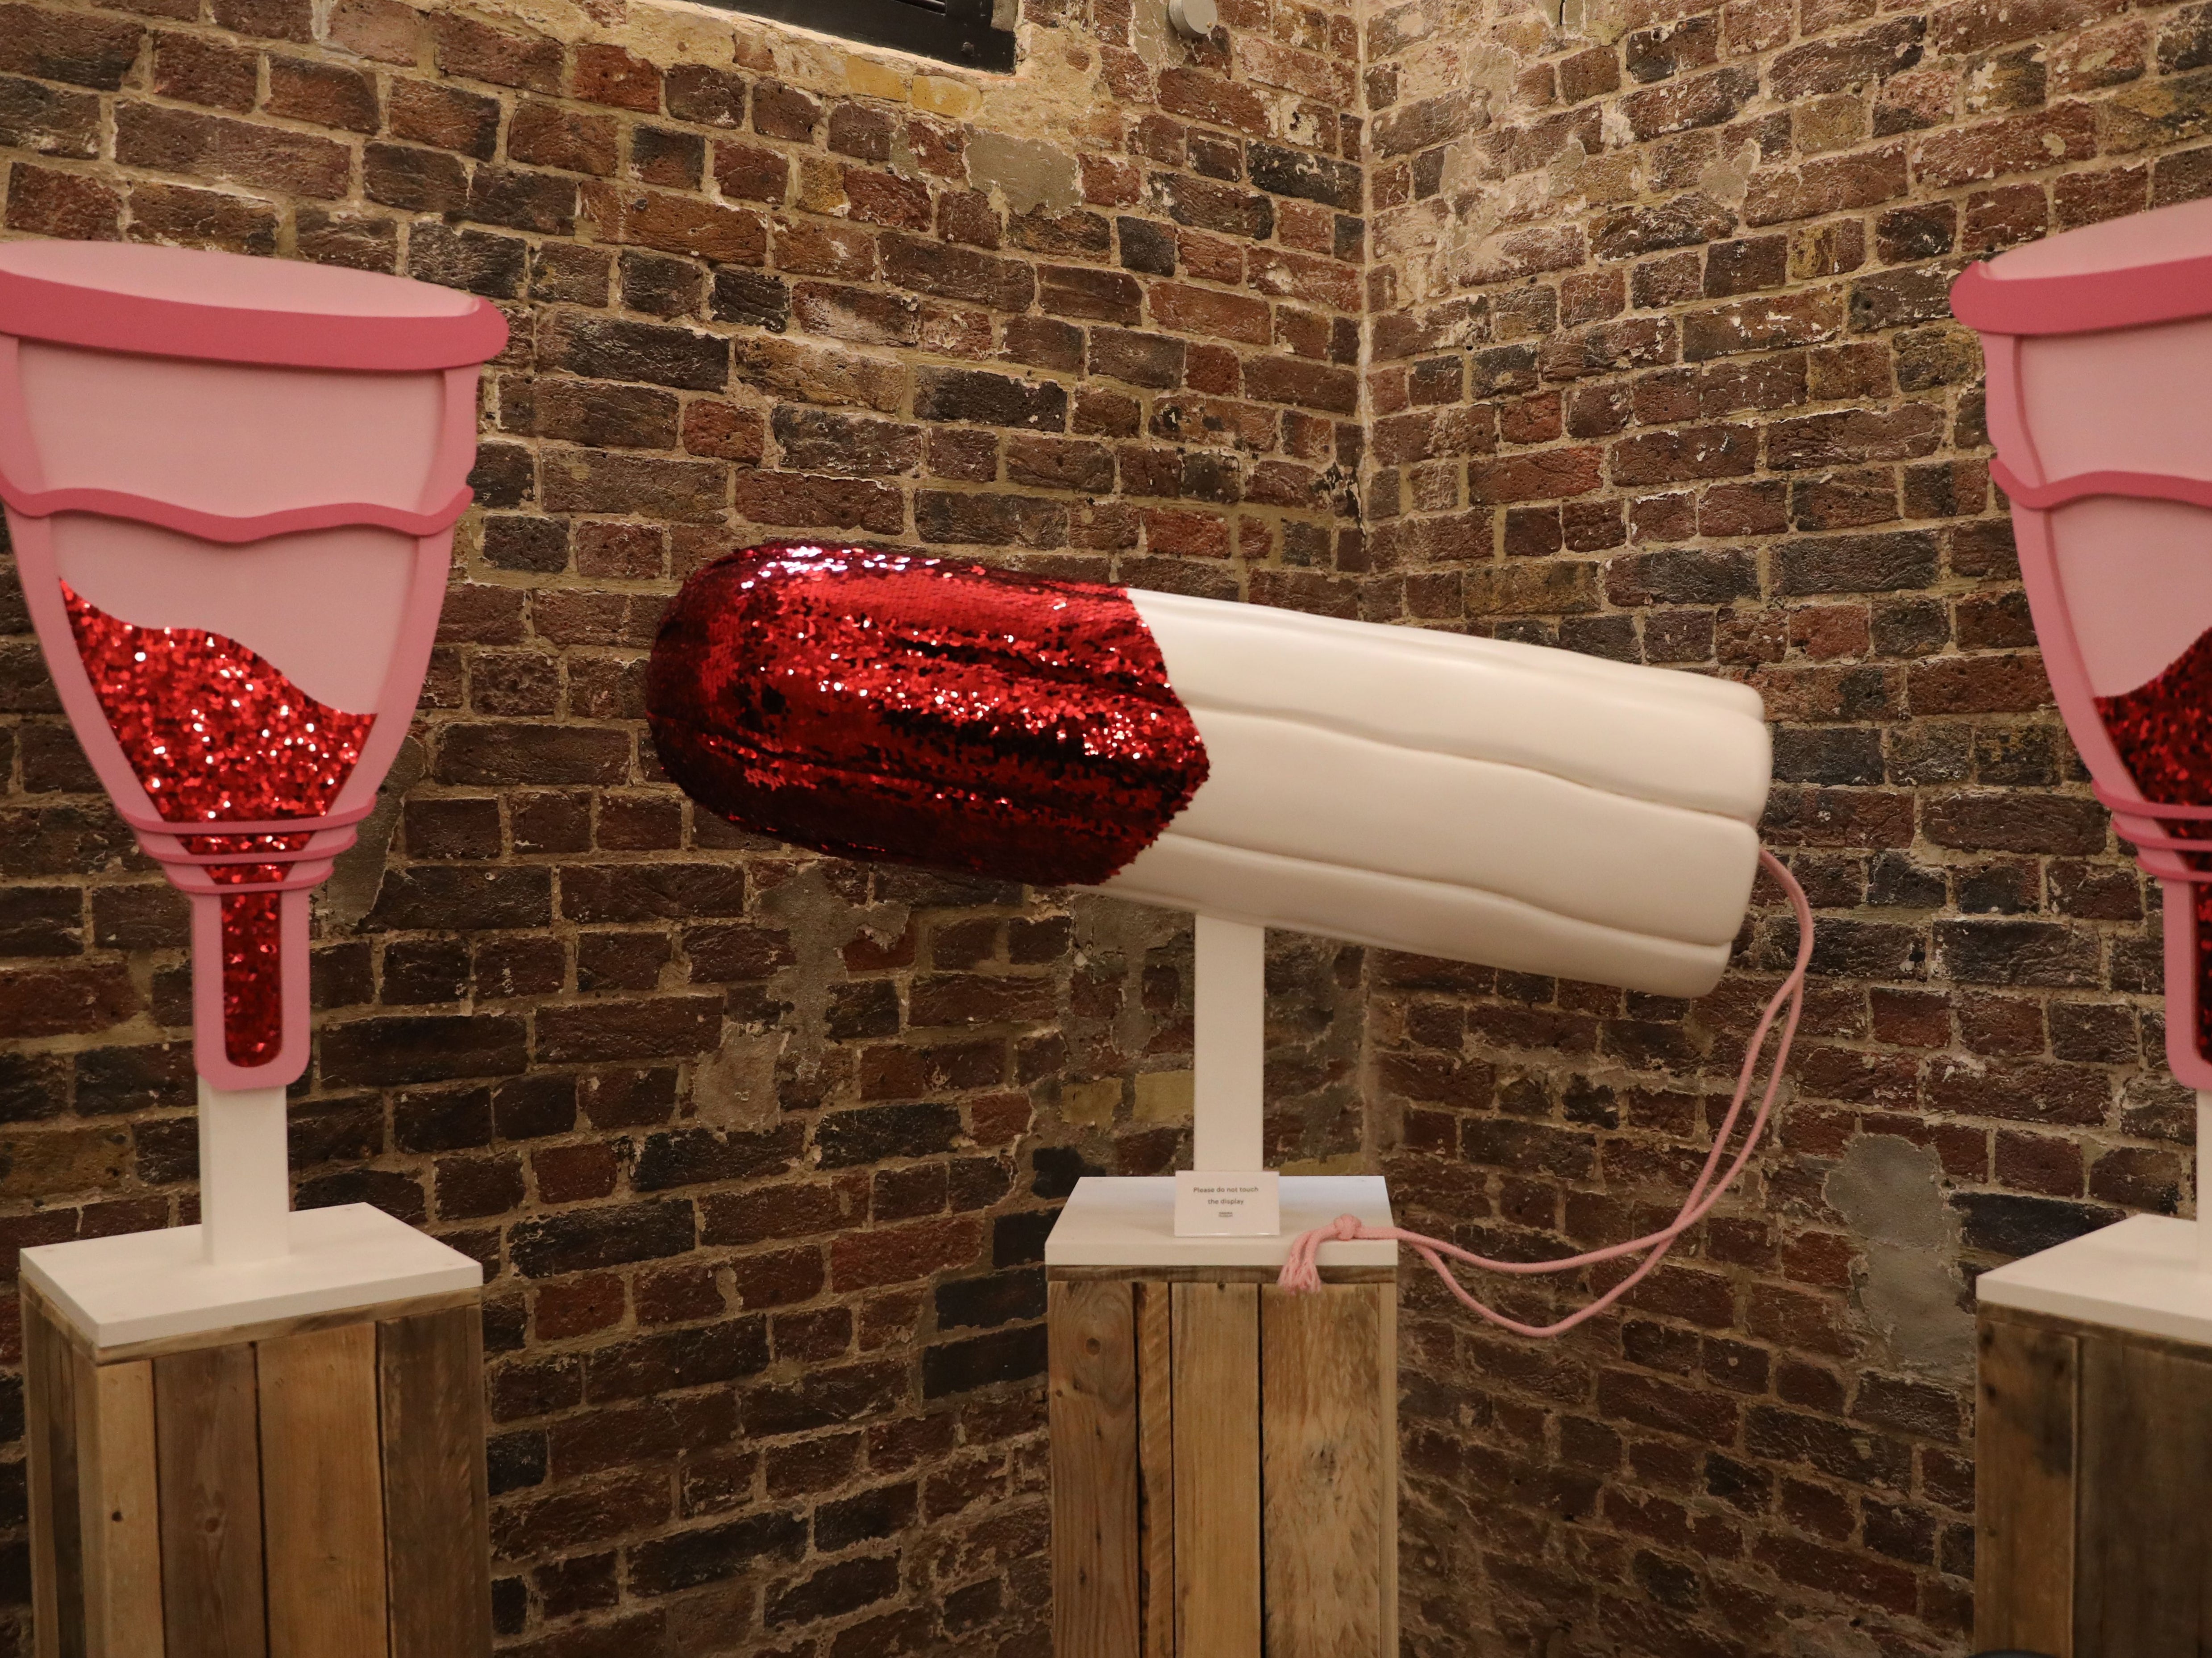 A menstrual cup and tampon at display at the Vagina Museum